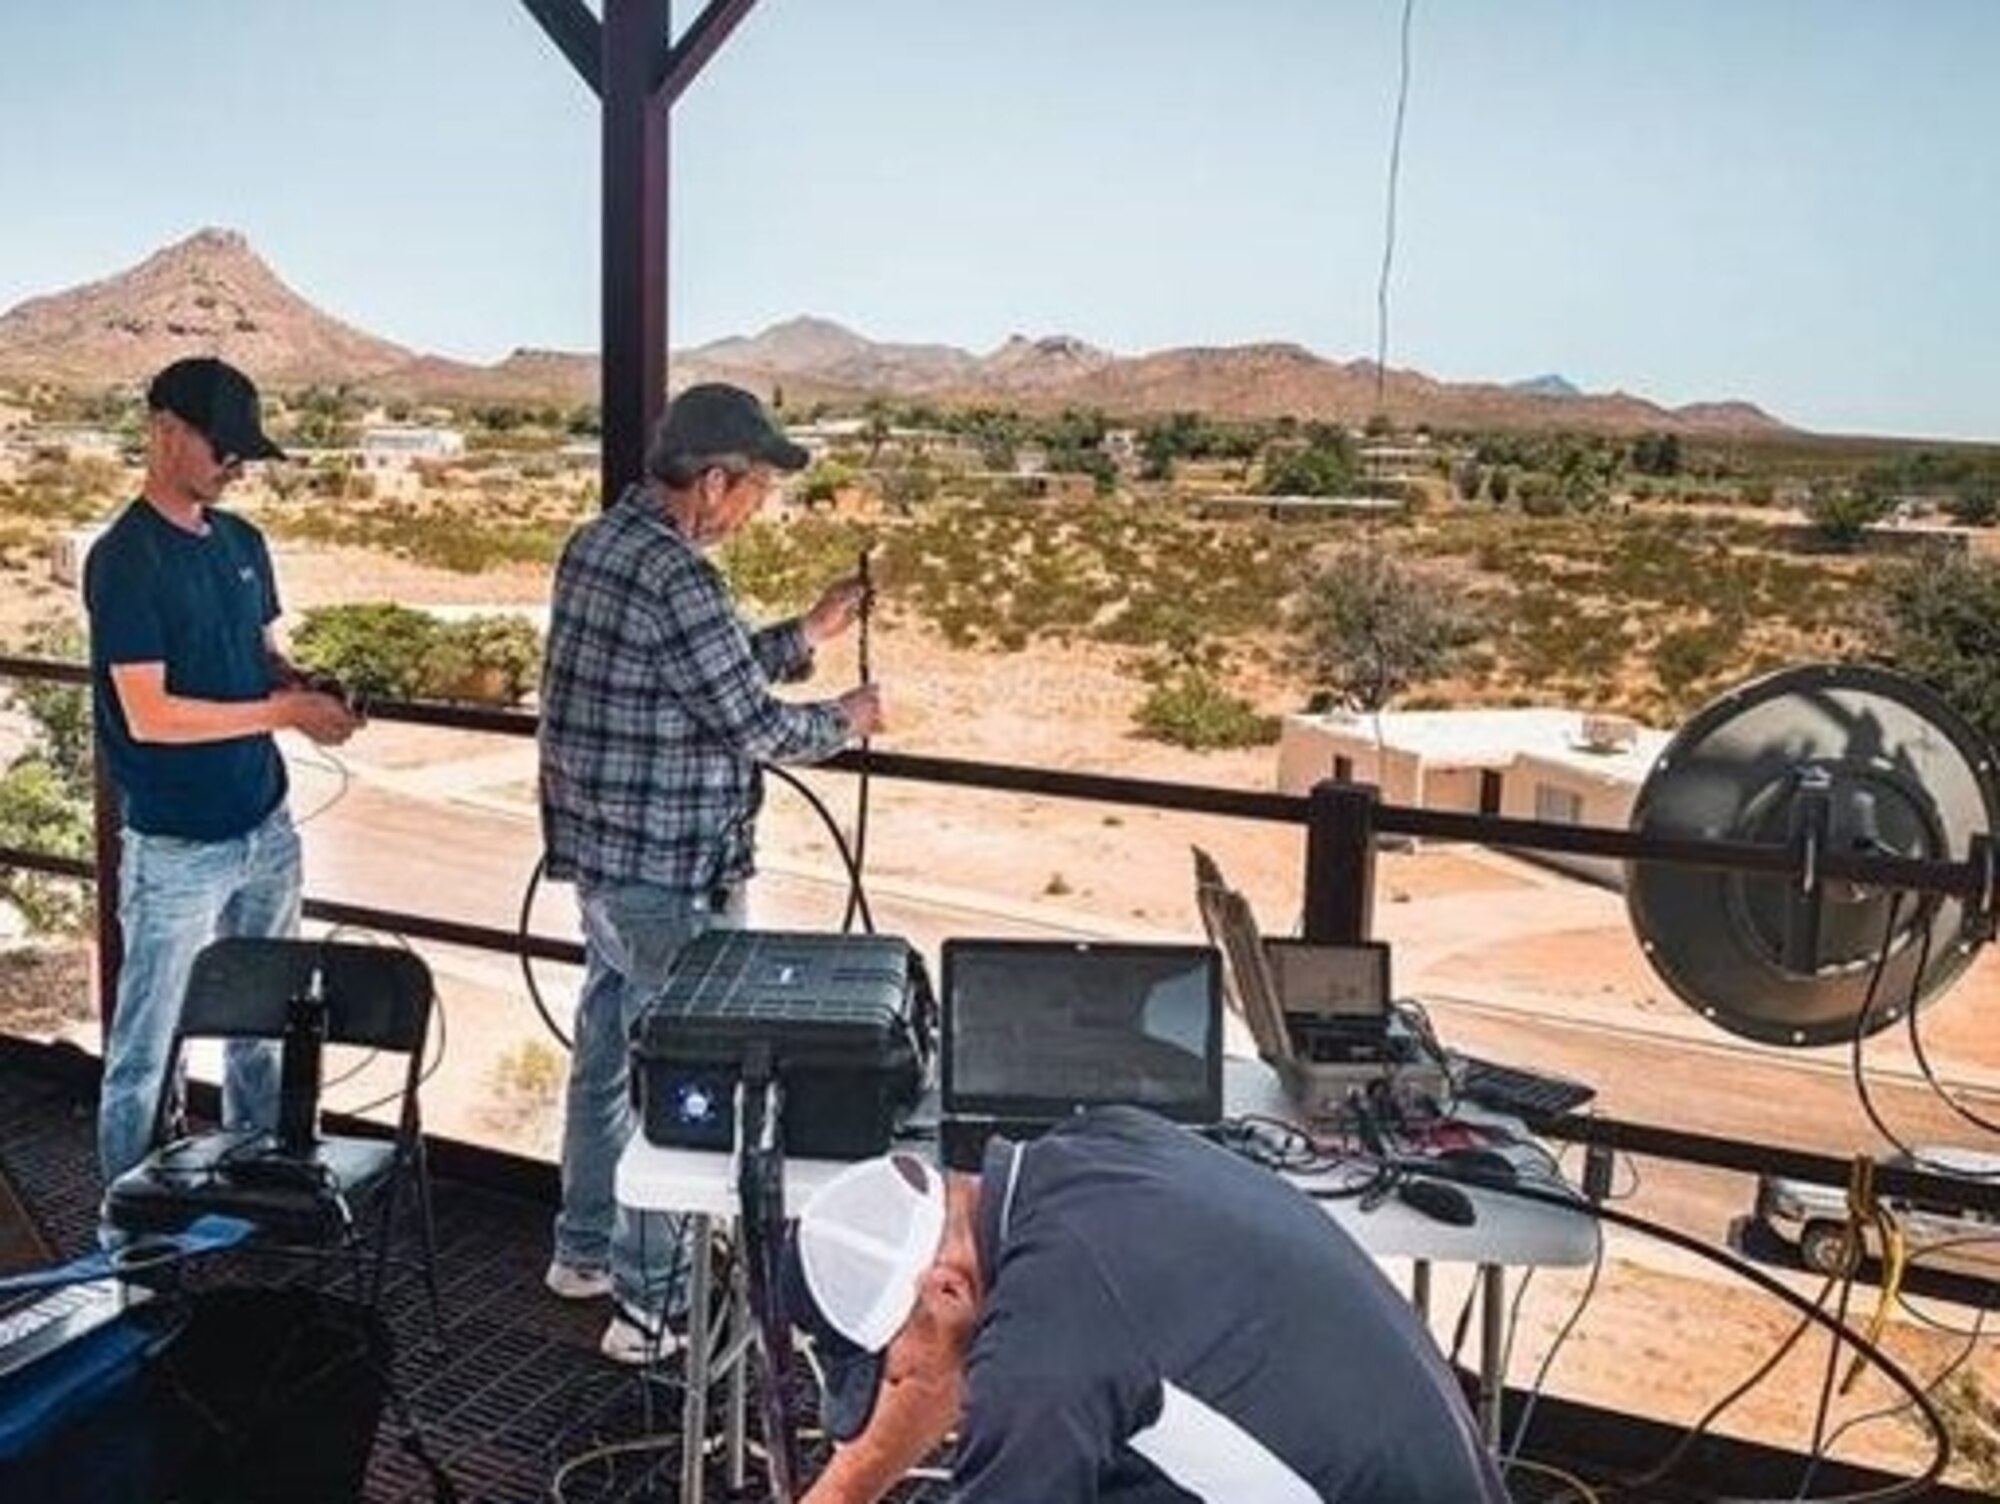 three men setting up equipment in the desert